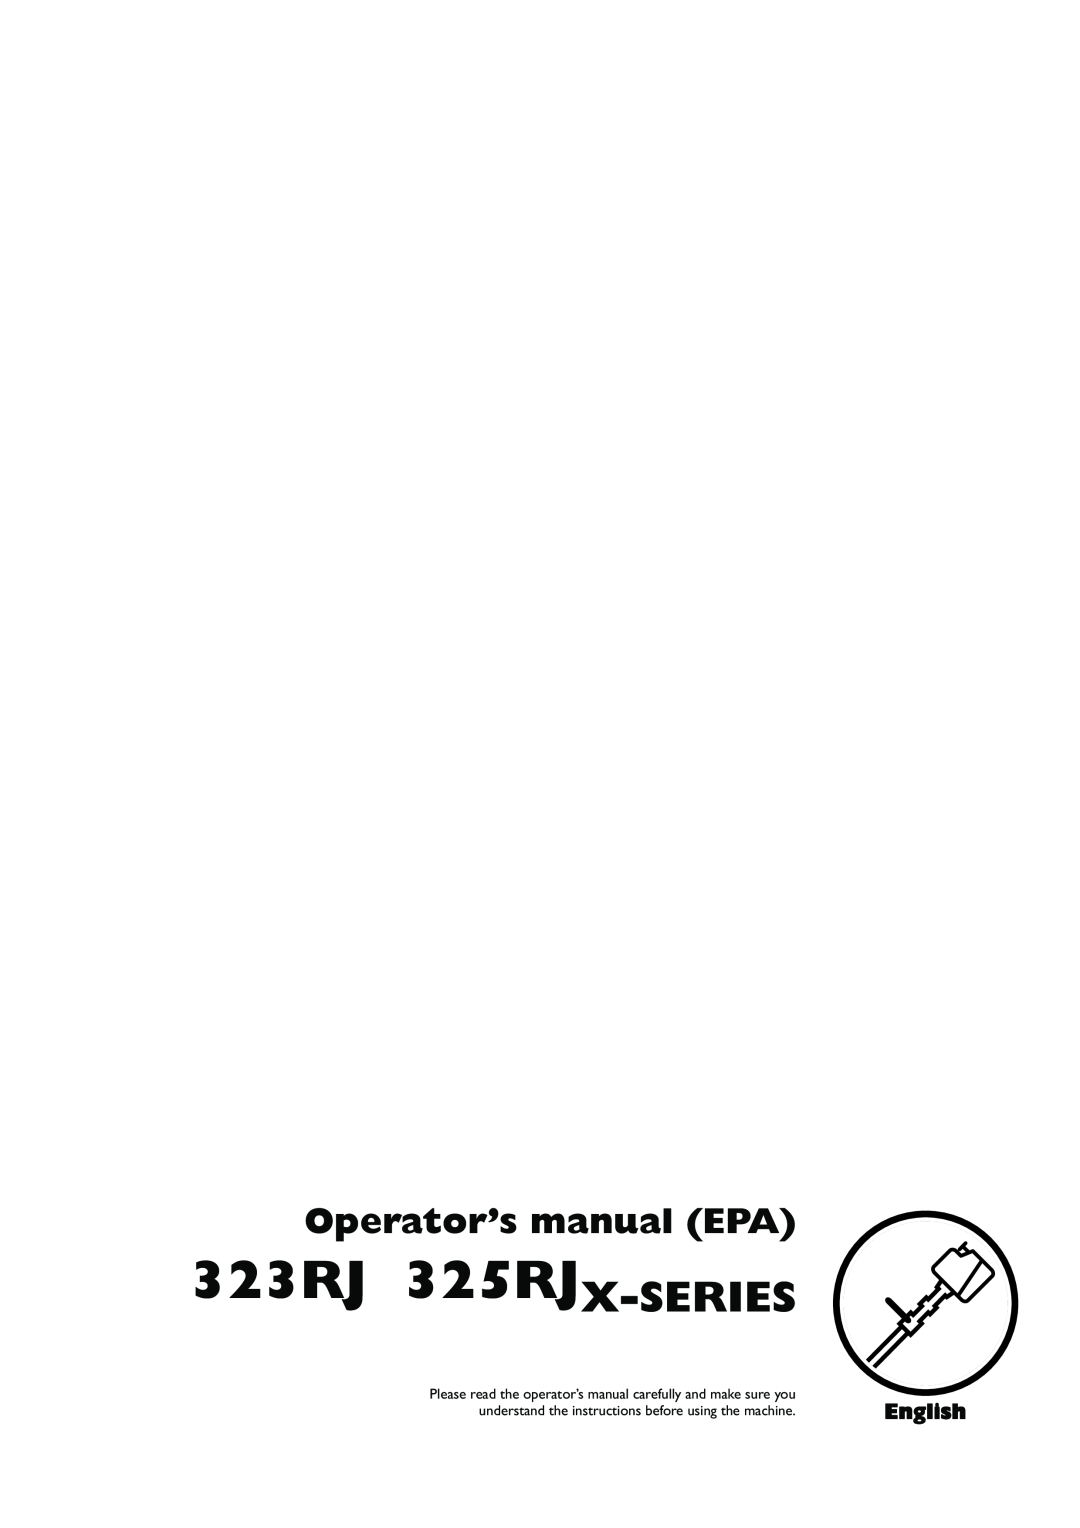 Husqvarna manual 323RJ 325RJX-SERIES, Operator’s manual EPA, English 